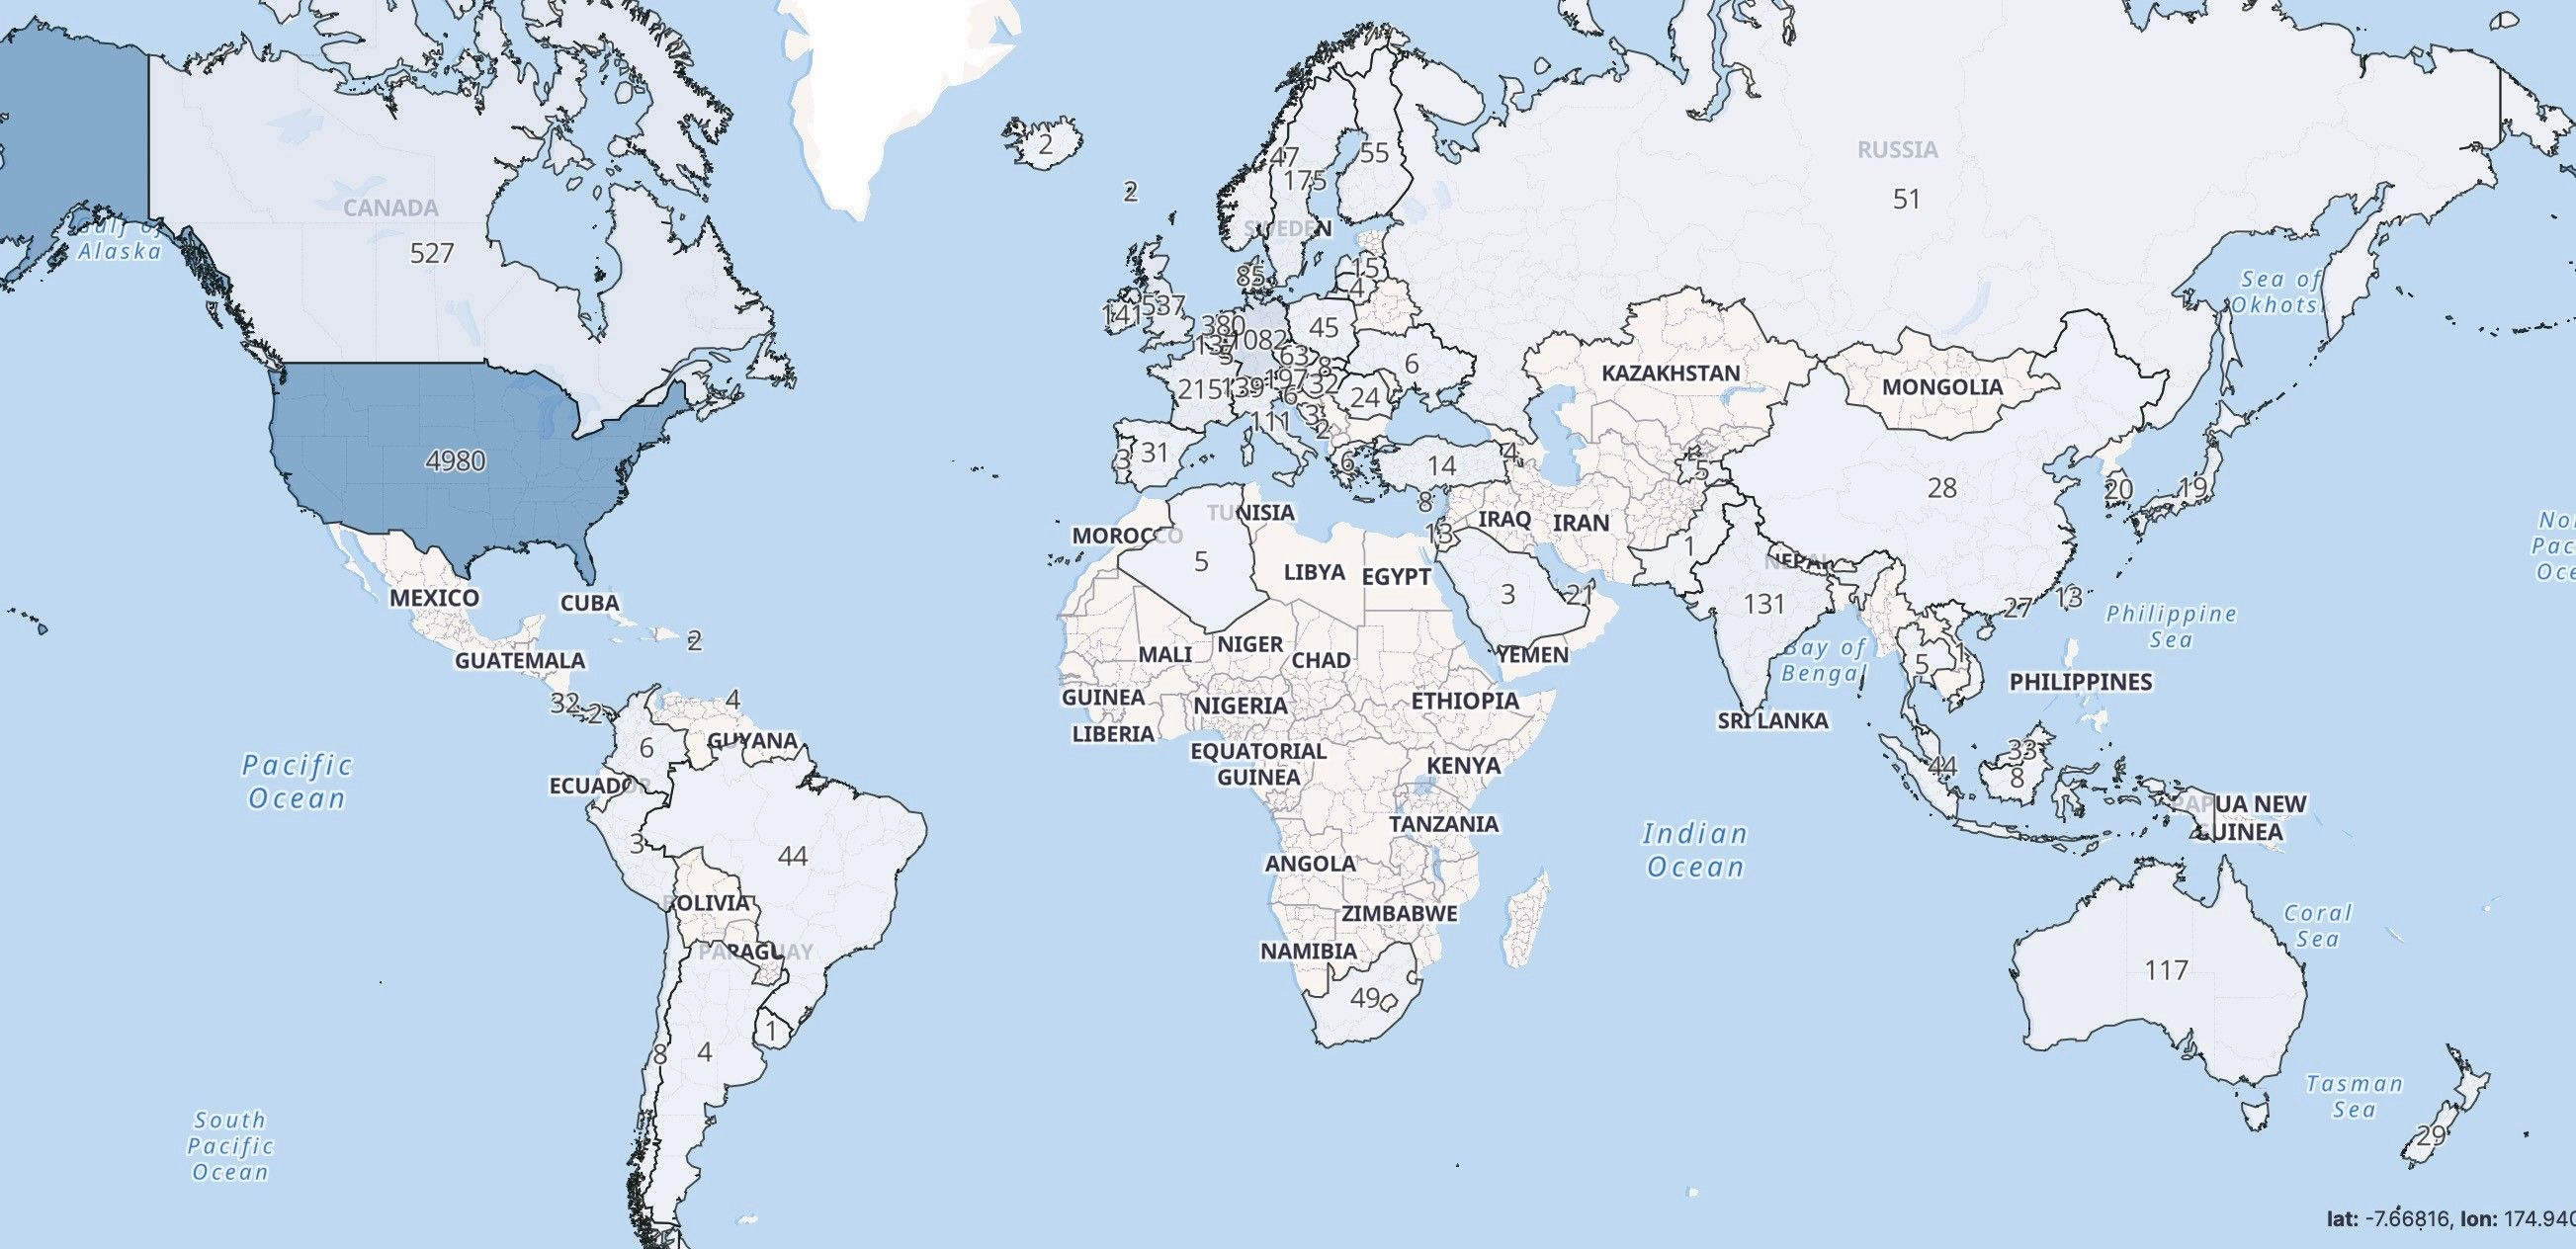 Global distribution of CrushFTP web interfaces